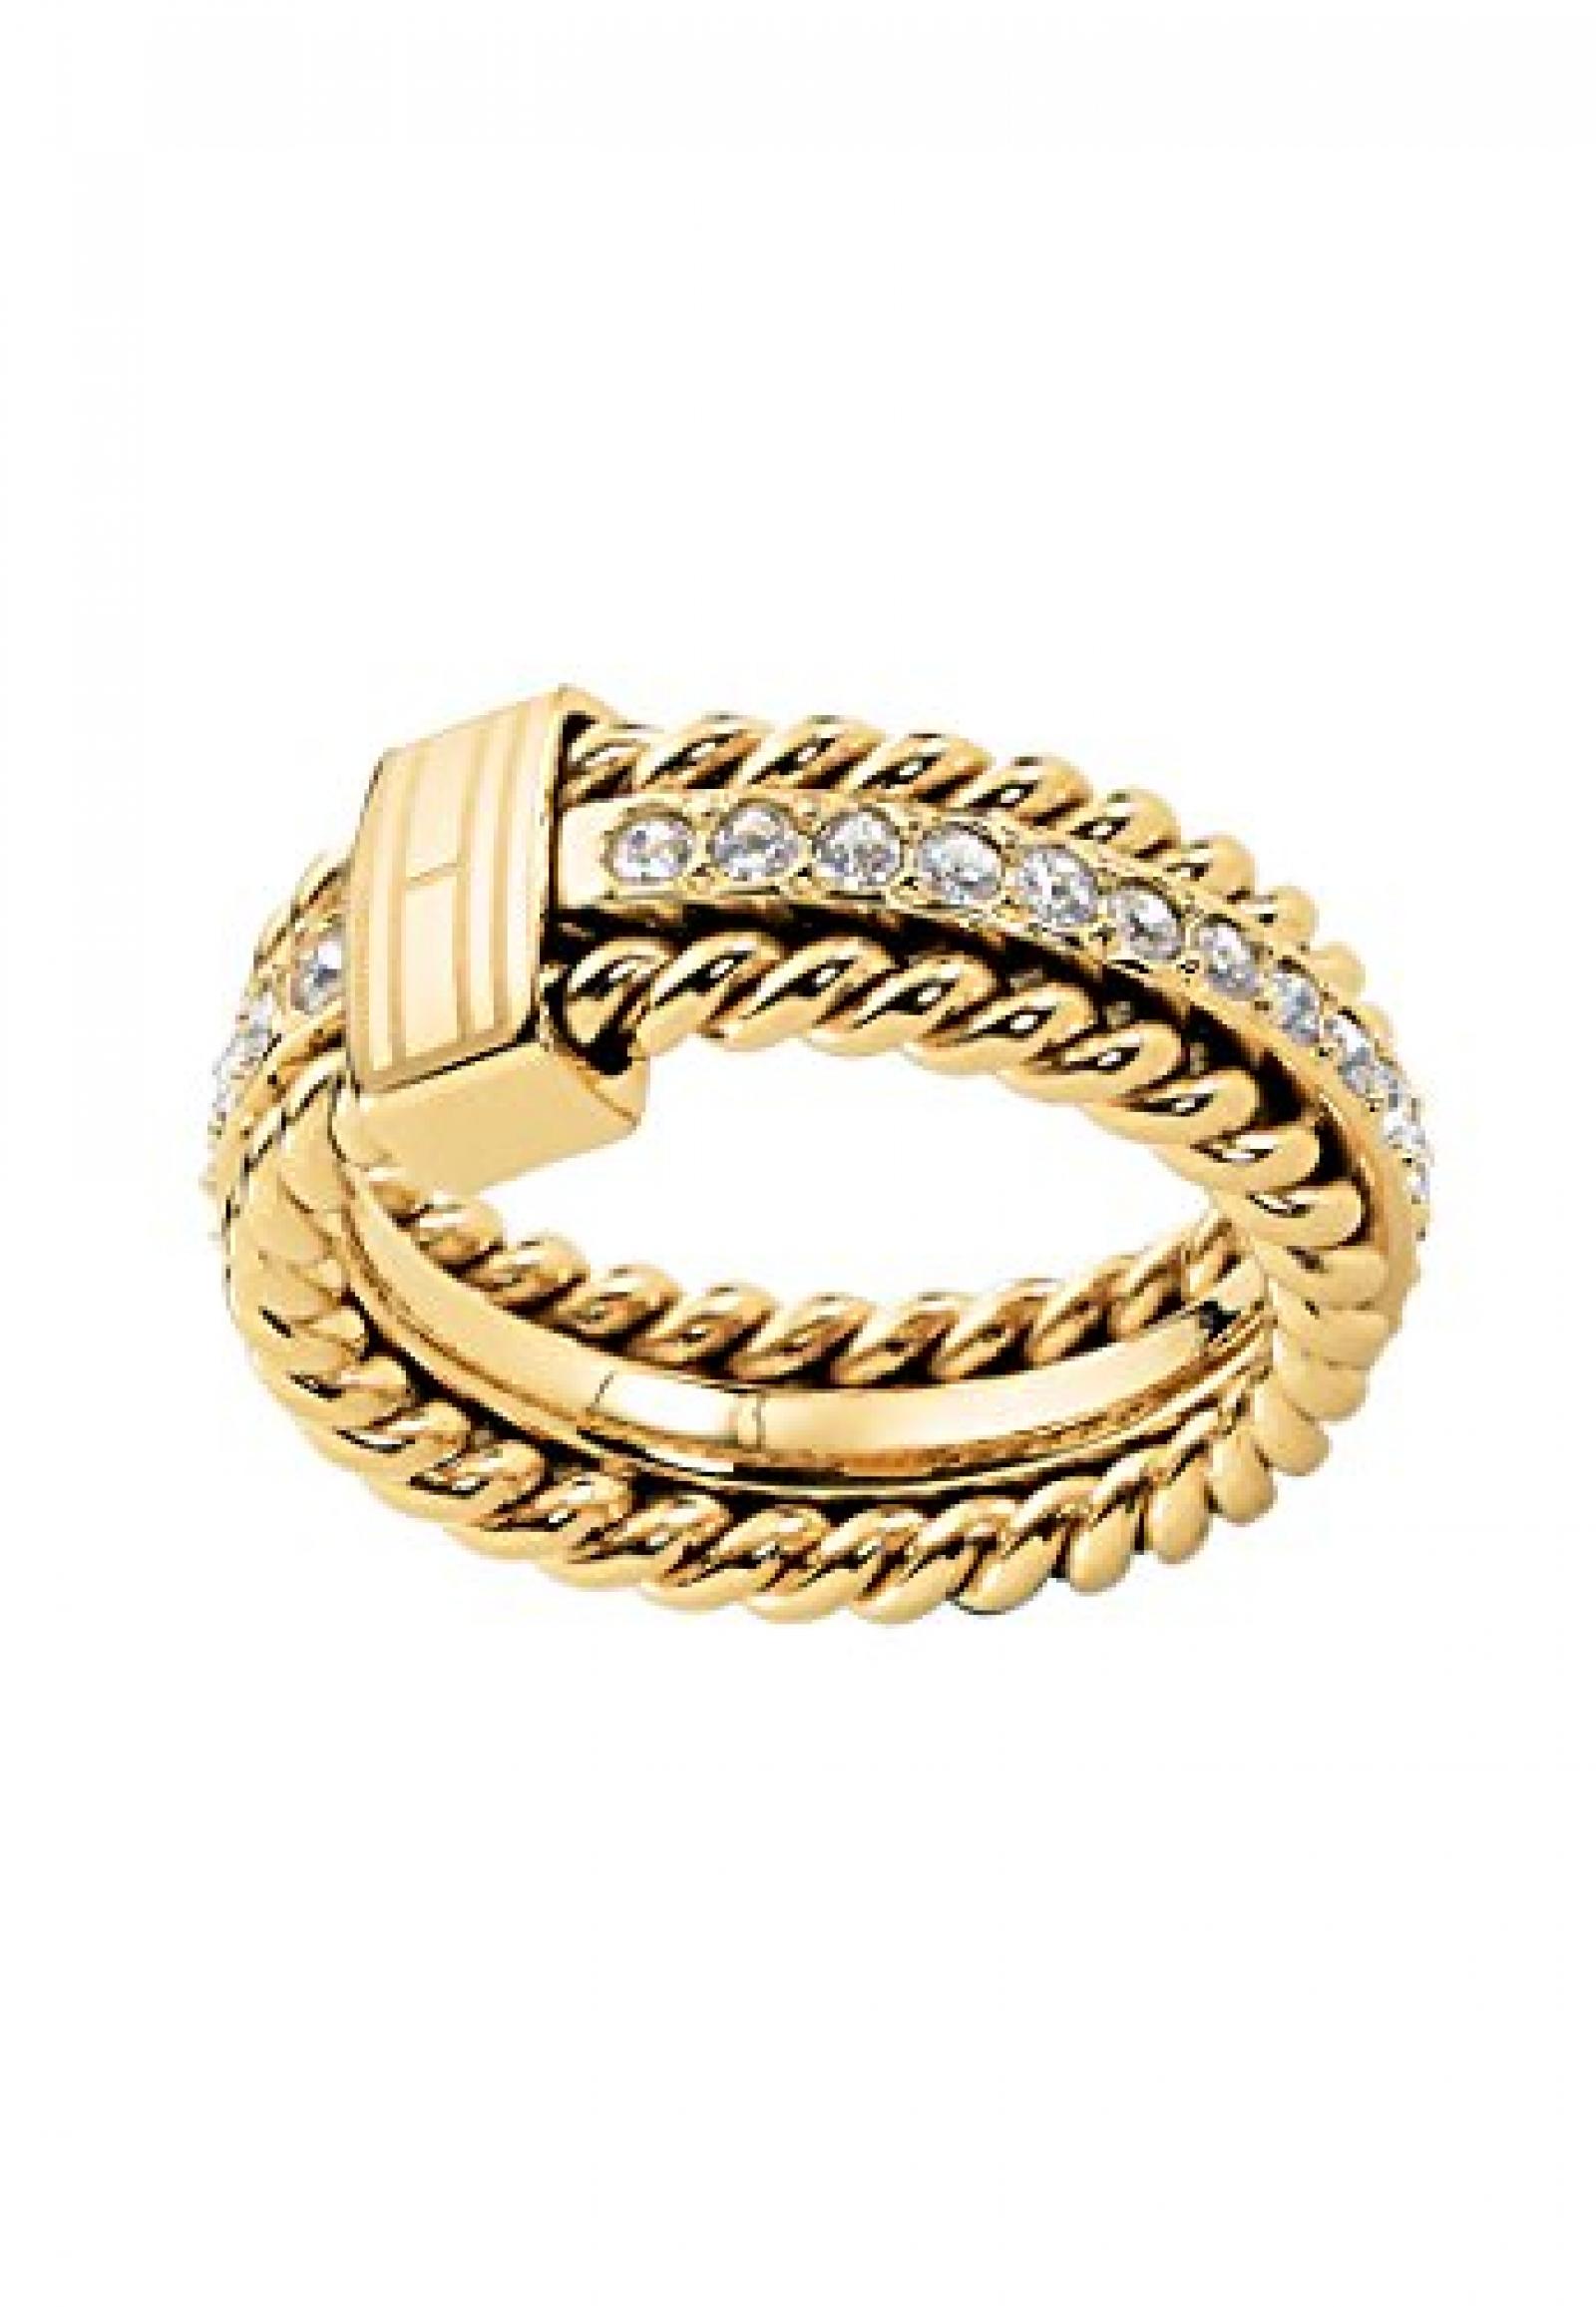 Tommy Hilfiger jewelry Damen-Ring Edelstahl 2700602 